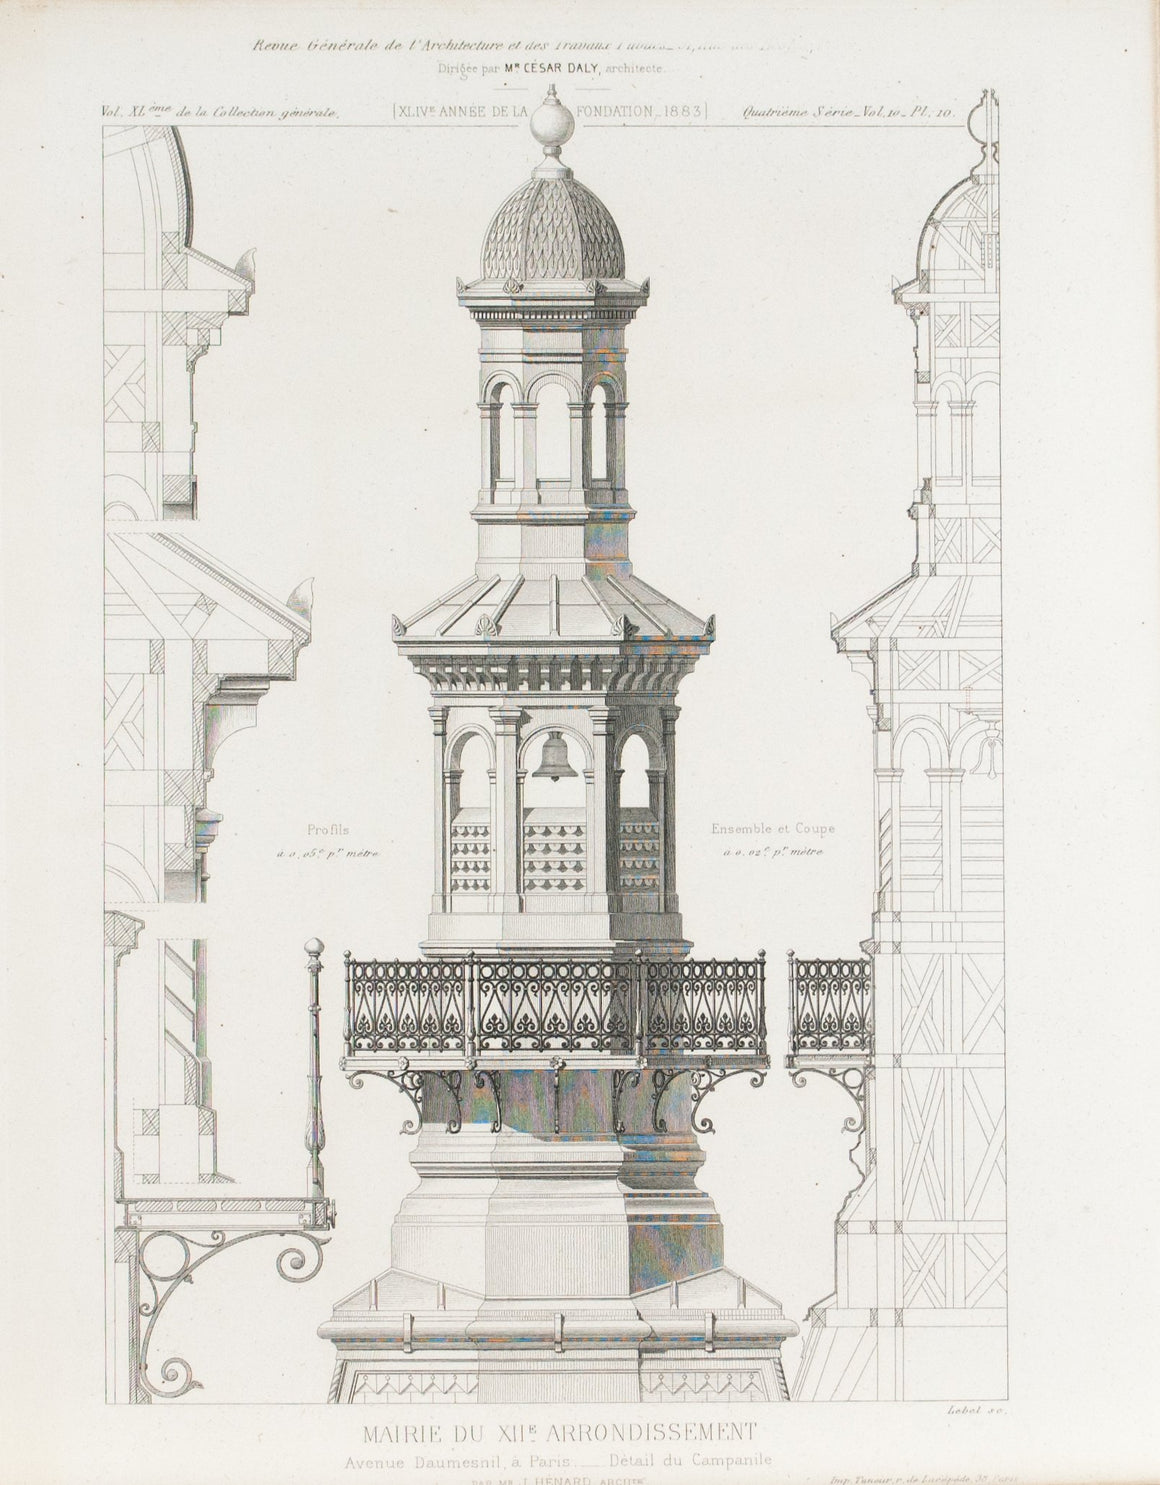 Paris Town Hall Building in Paris Main Tower Elements 1883 Architecture Print